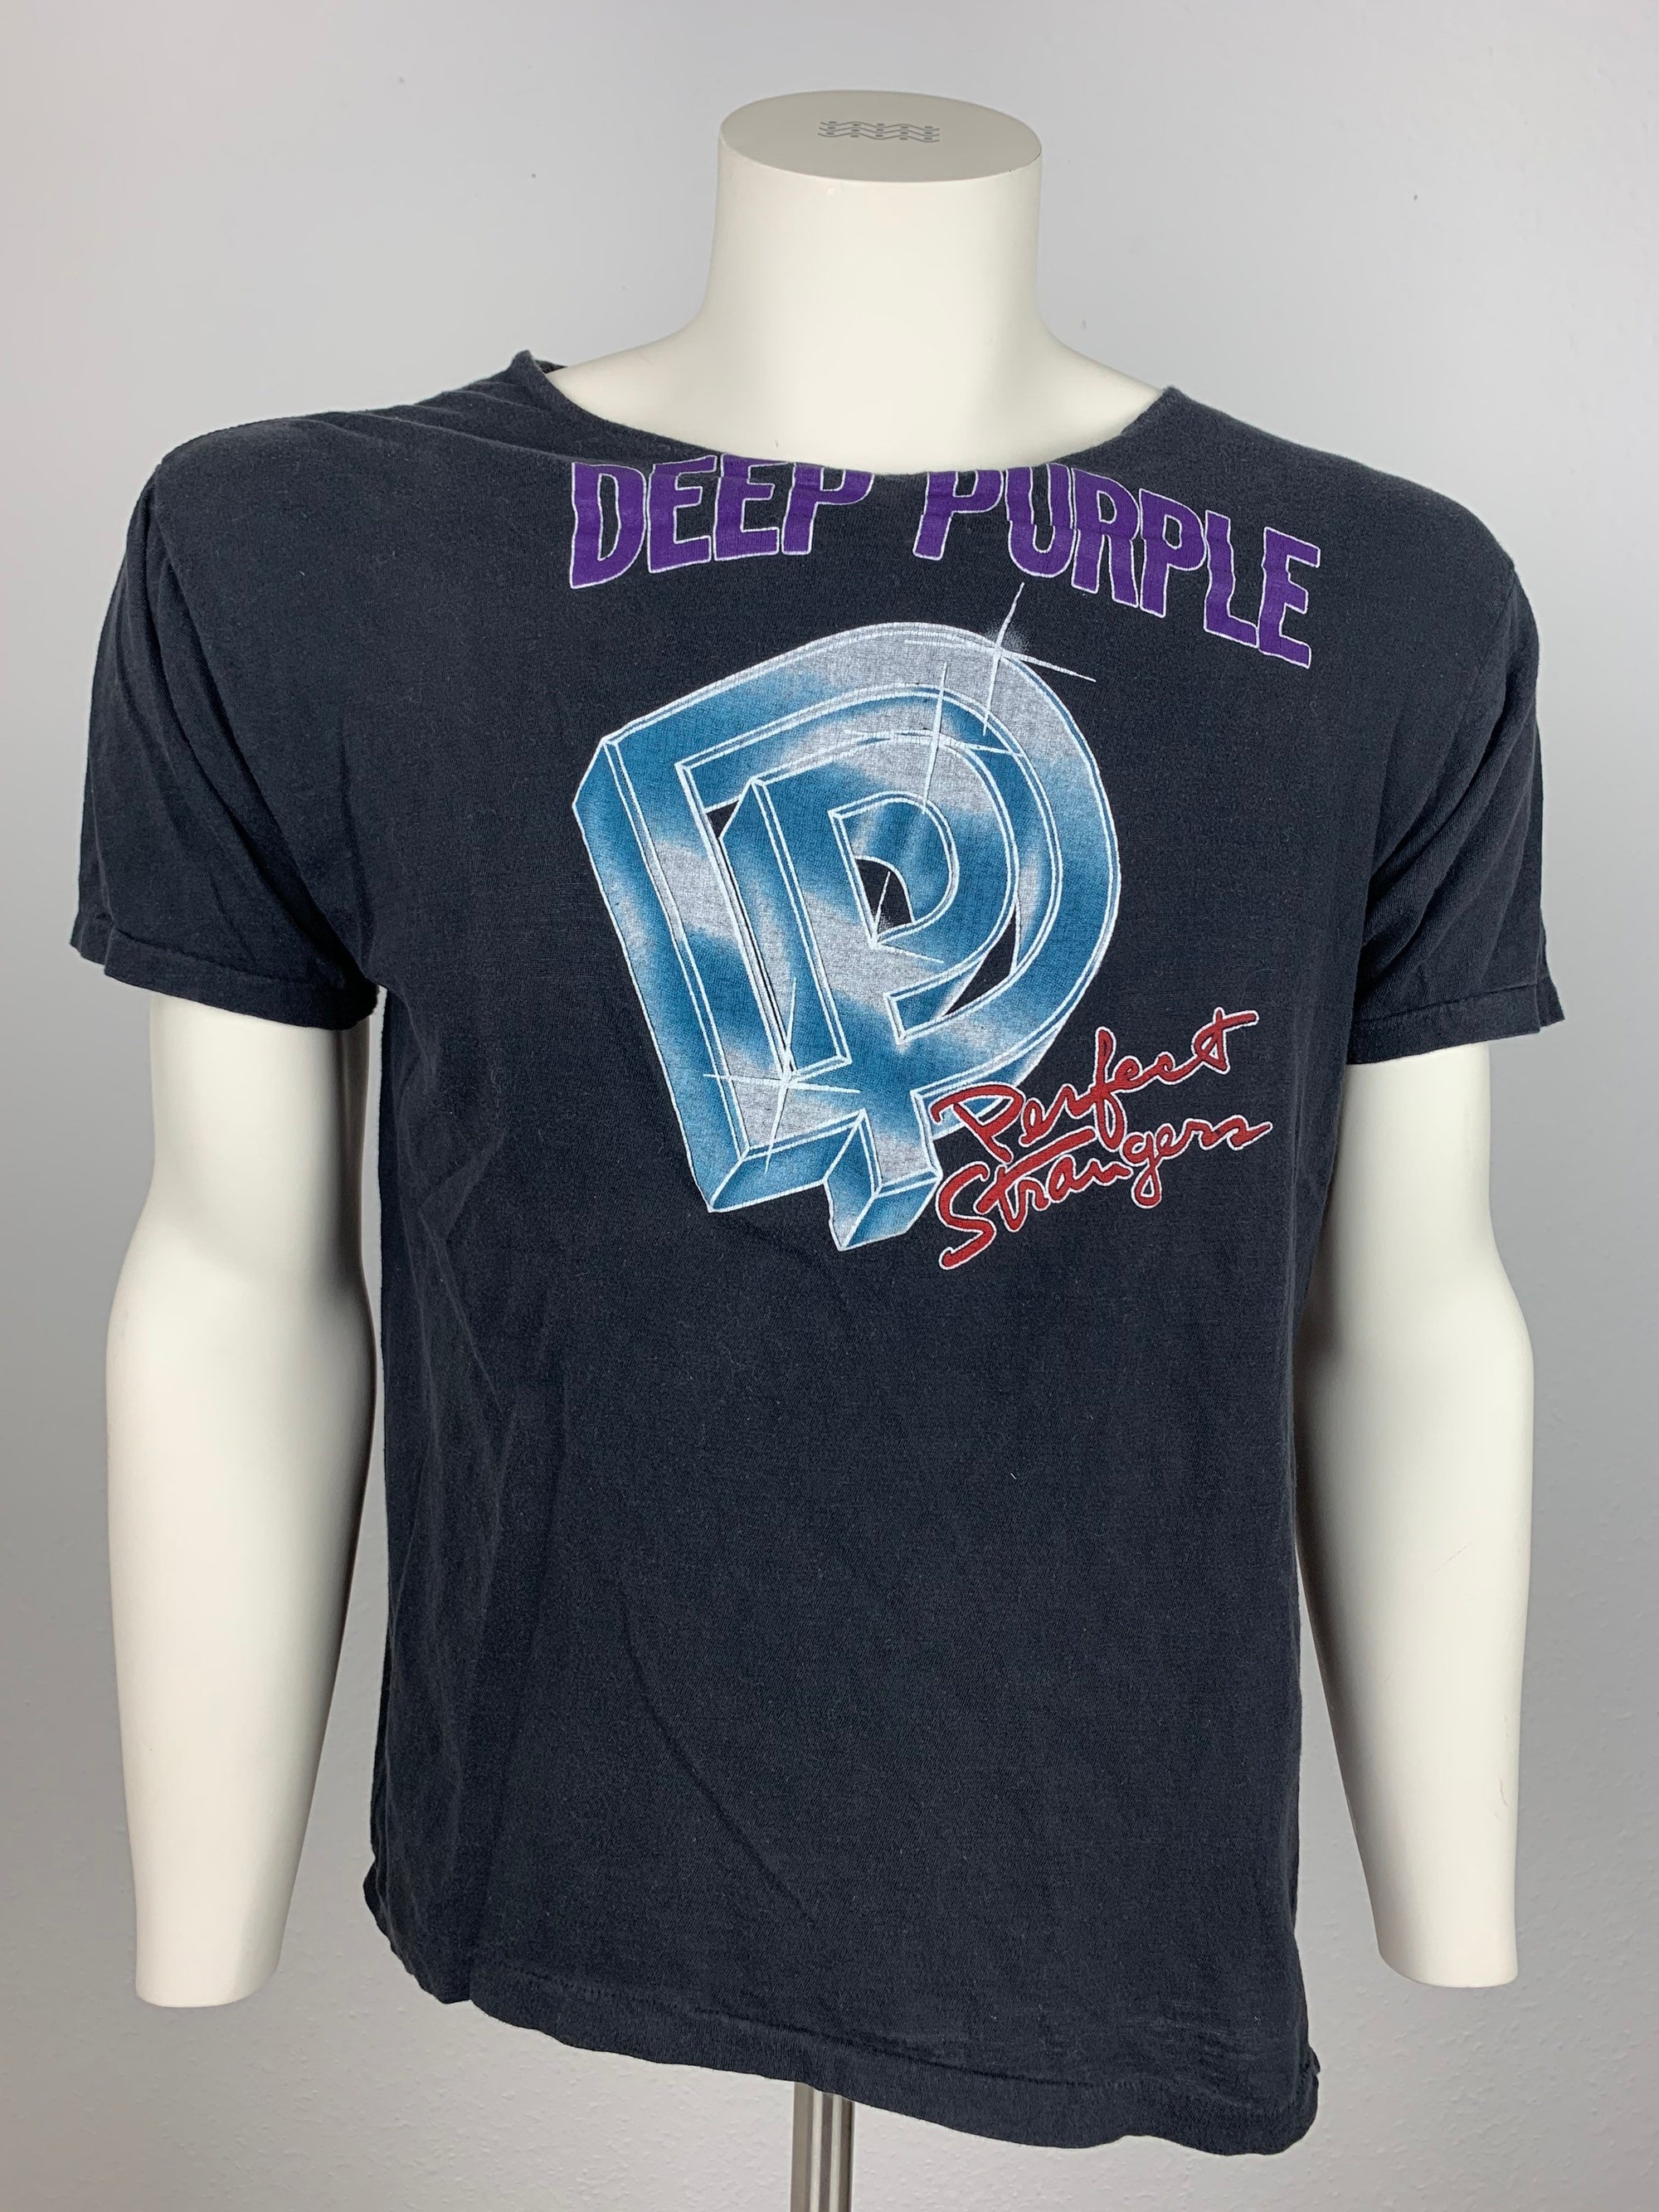 Discover DEEP PURPLE 80s T-Shirt Vintage / Perfect Strangers